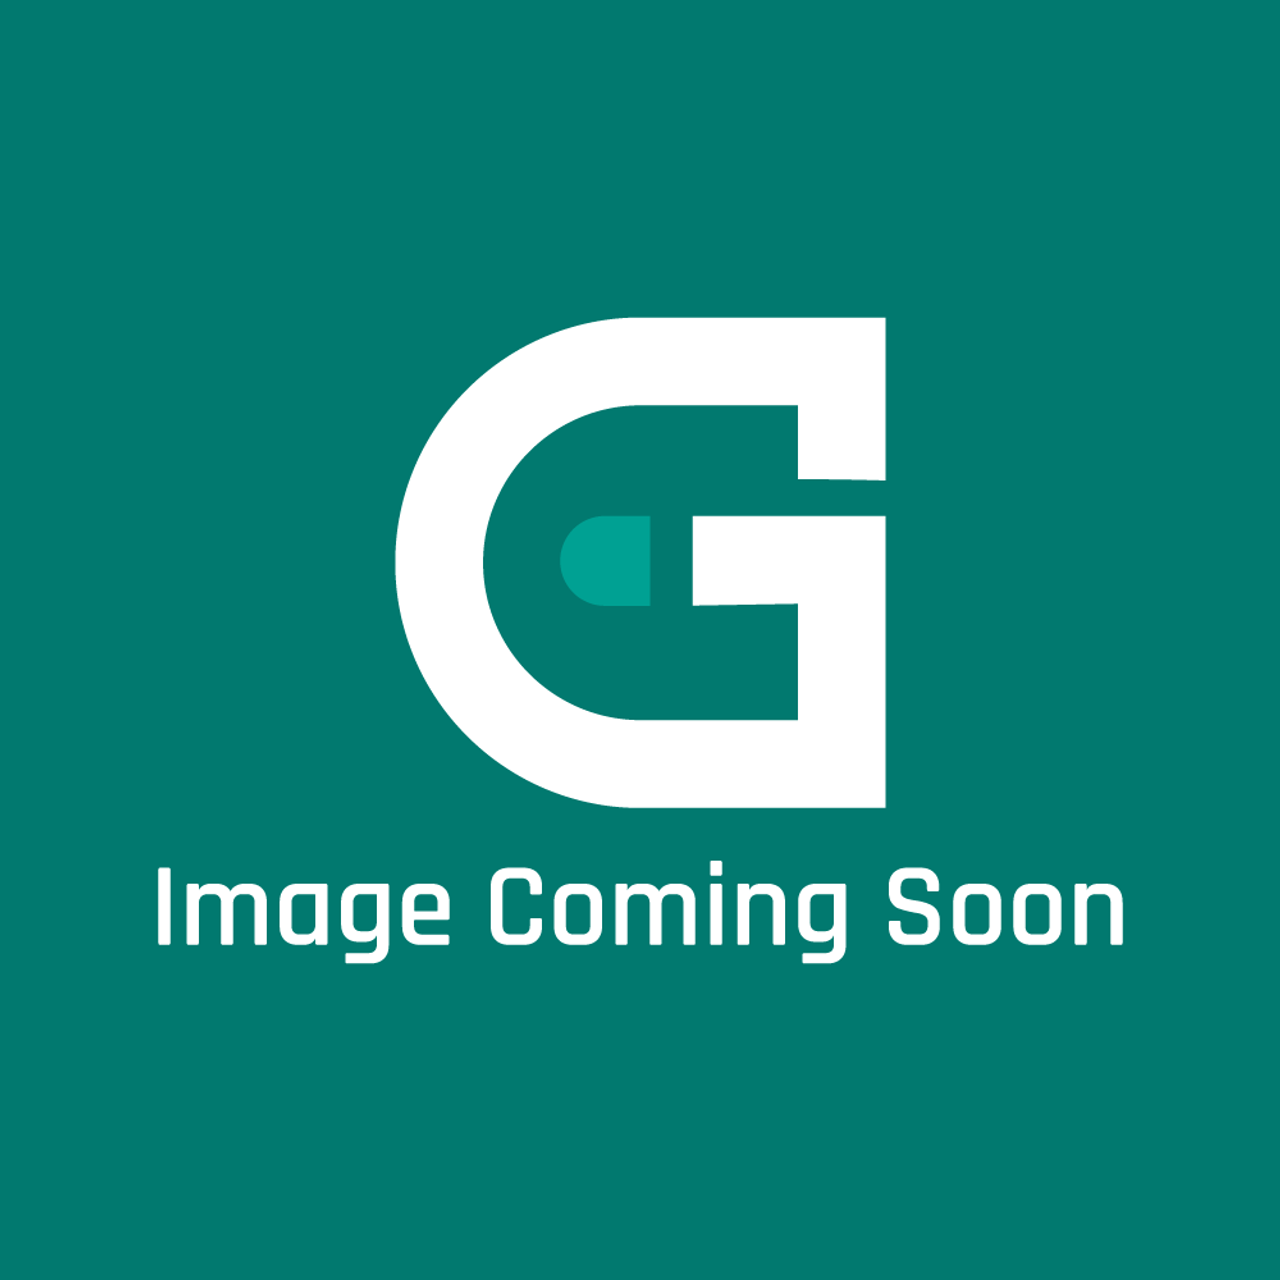 GE Appliances WB10X30947 - Gusset Hinge Lh - Image Coming Soon!